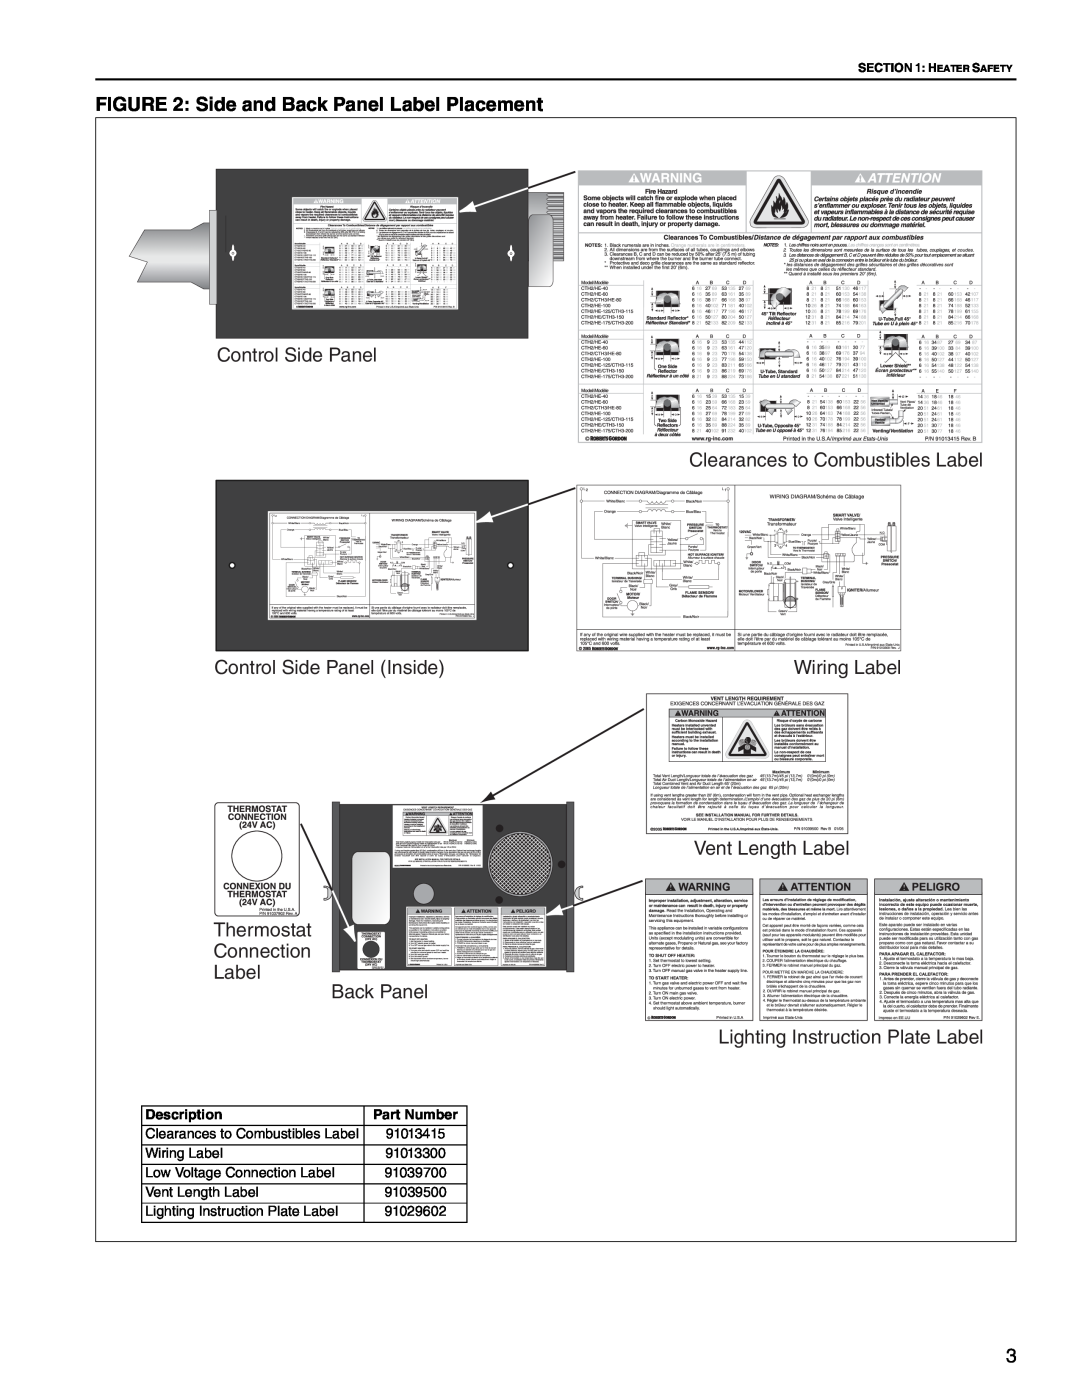 Roberts Gorden CTH2-150 Side and Back Panel Label Placement, Control Side Panel Control Side Panel Inside, Description 